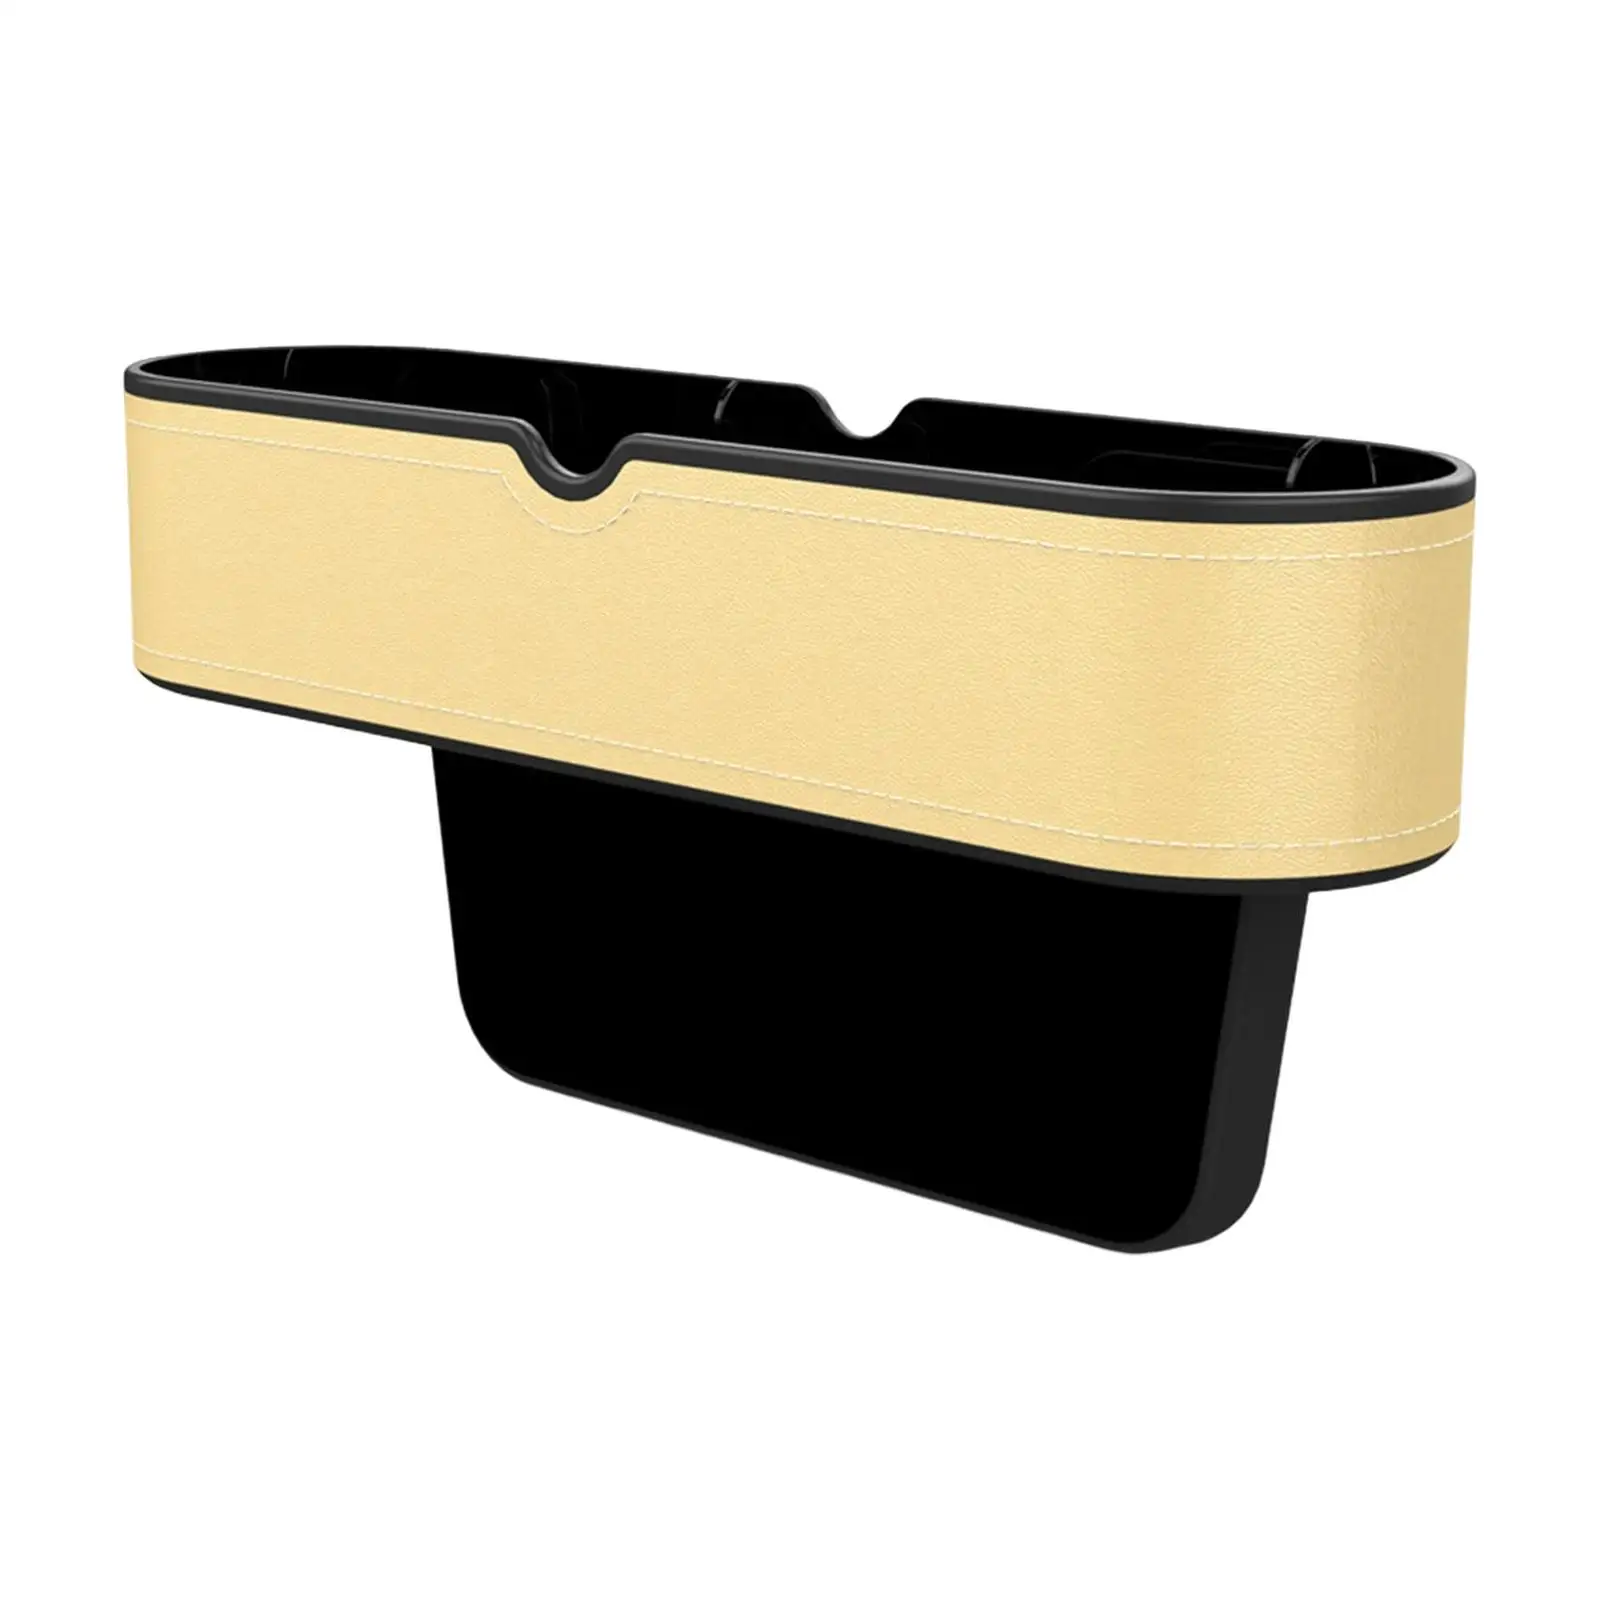 Universal seat Filler Organizer, Console Side Organizer, Front Seat Console pocket, Front Seat Box for Sunglasses Phones Keys